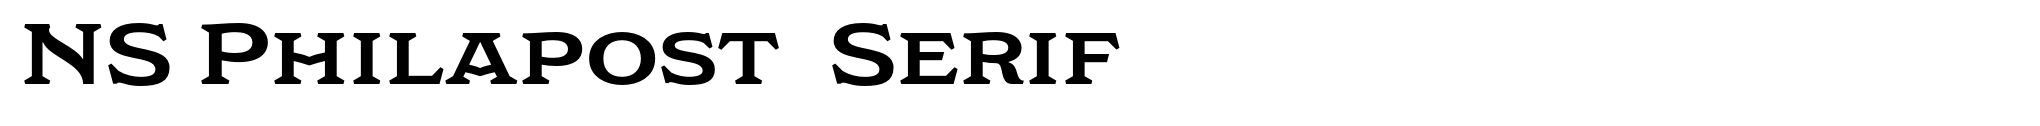 NS Philapost  Serif image